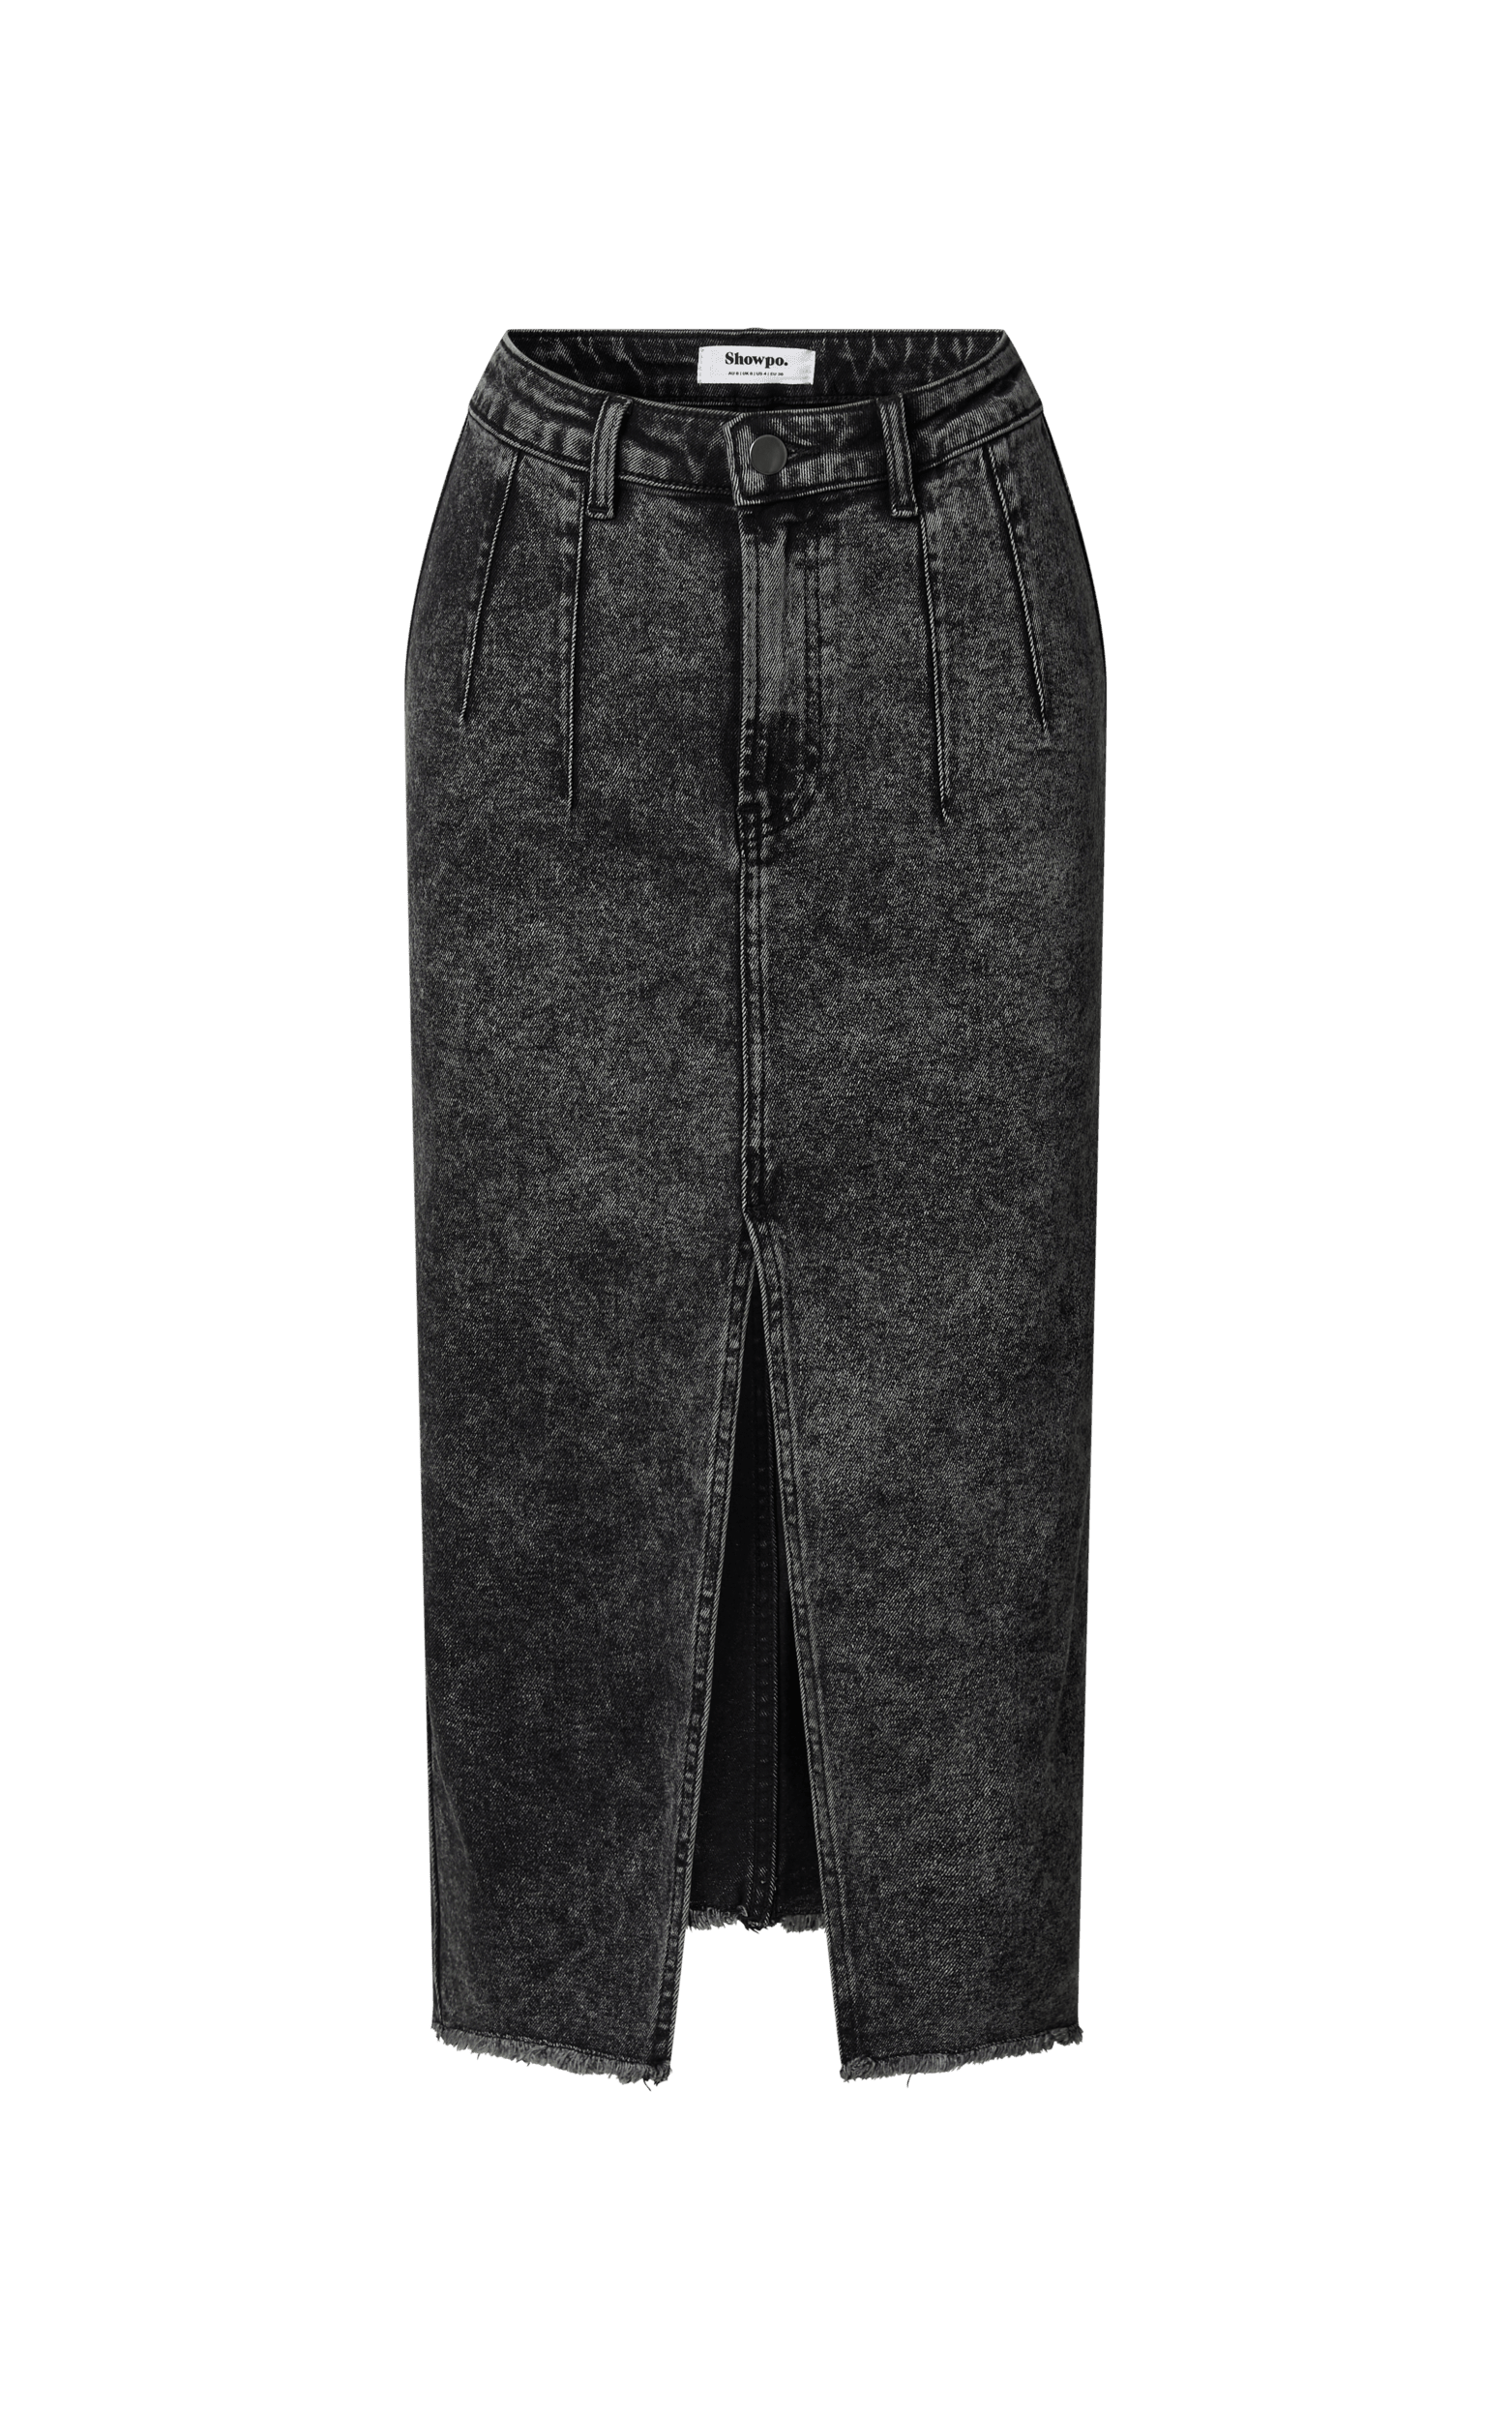 Janeve Midi Skirt - Front Split Denim Skirt in Black Acid Wash | Showpo